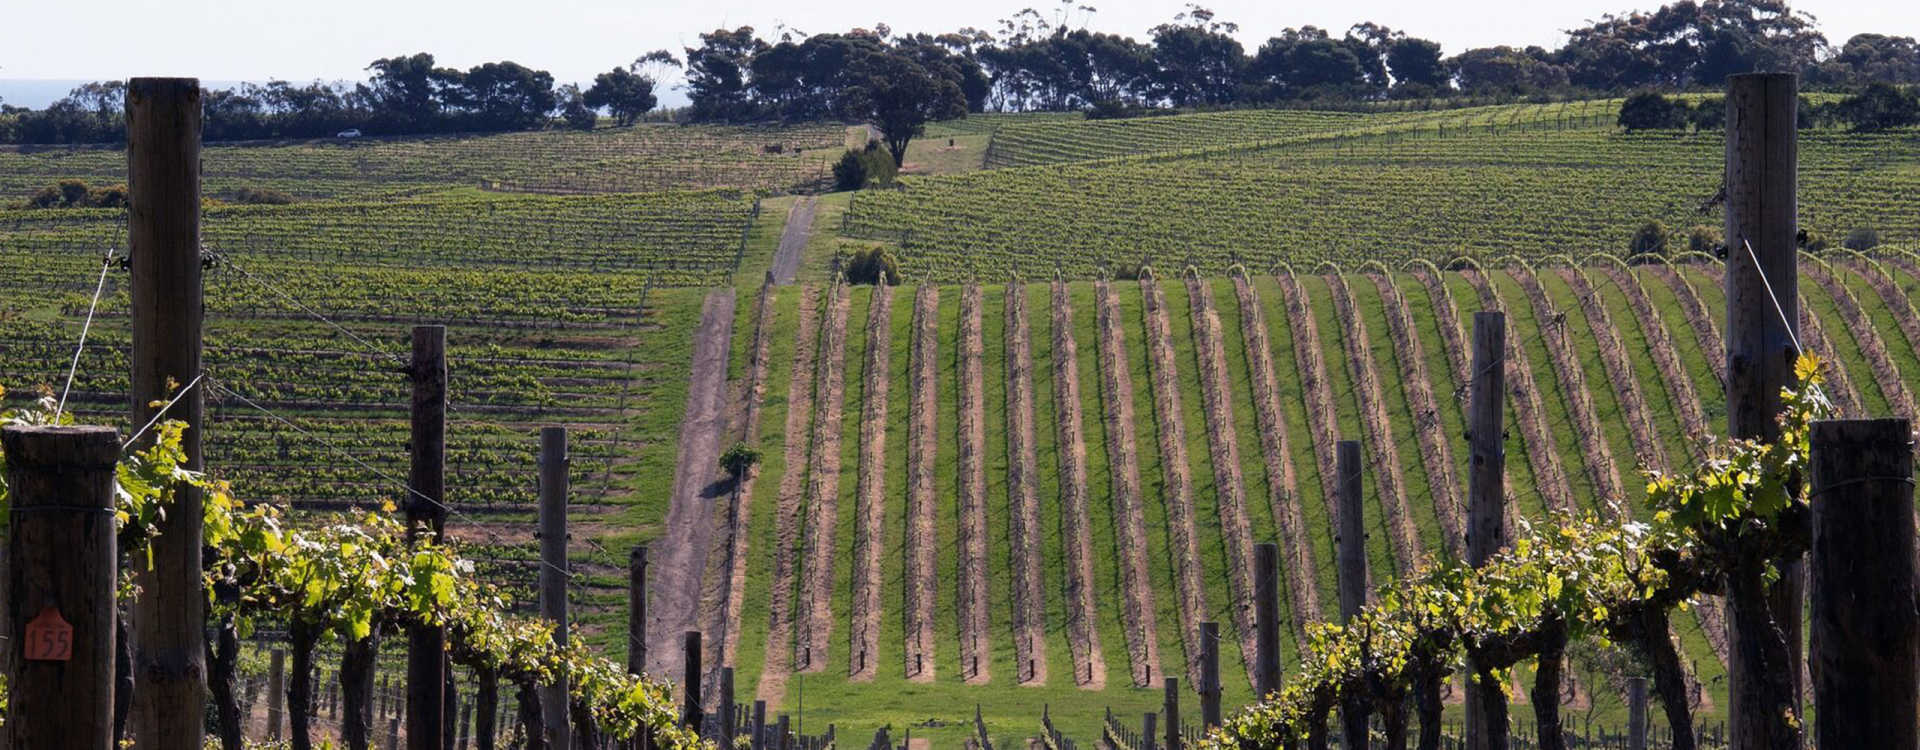 Image for McLaren Vale Wine South Australia content section